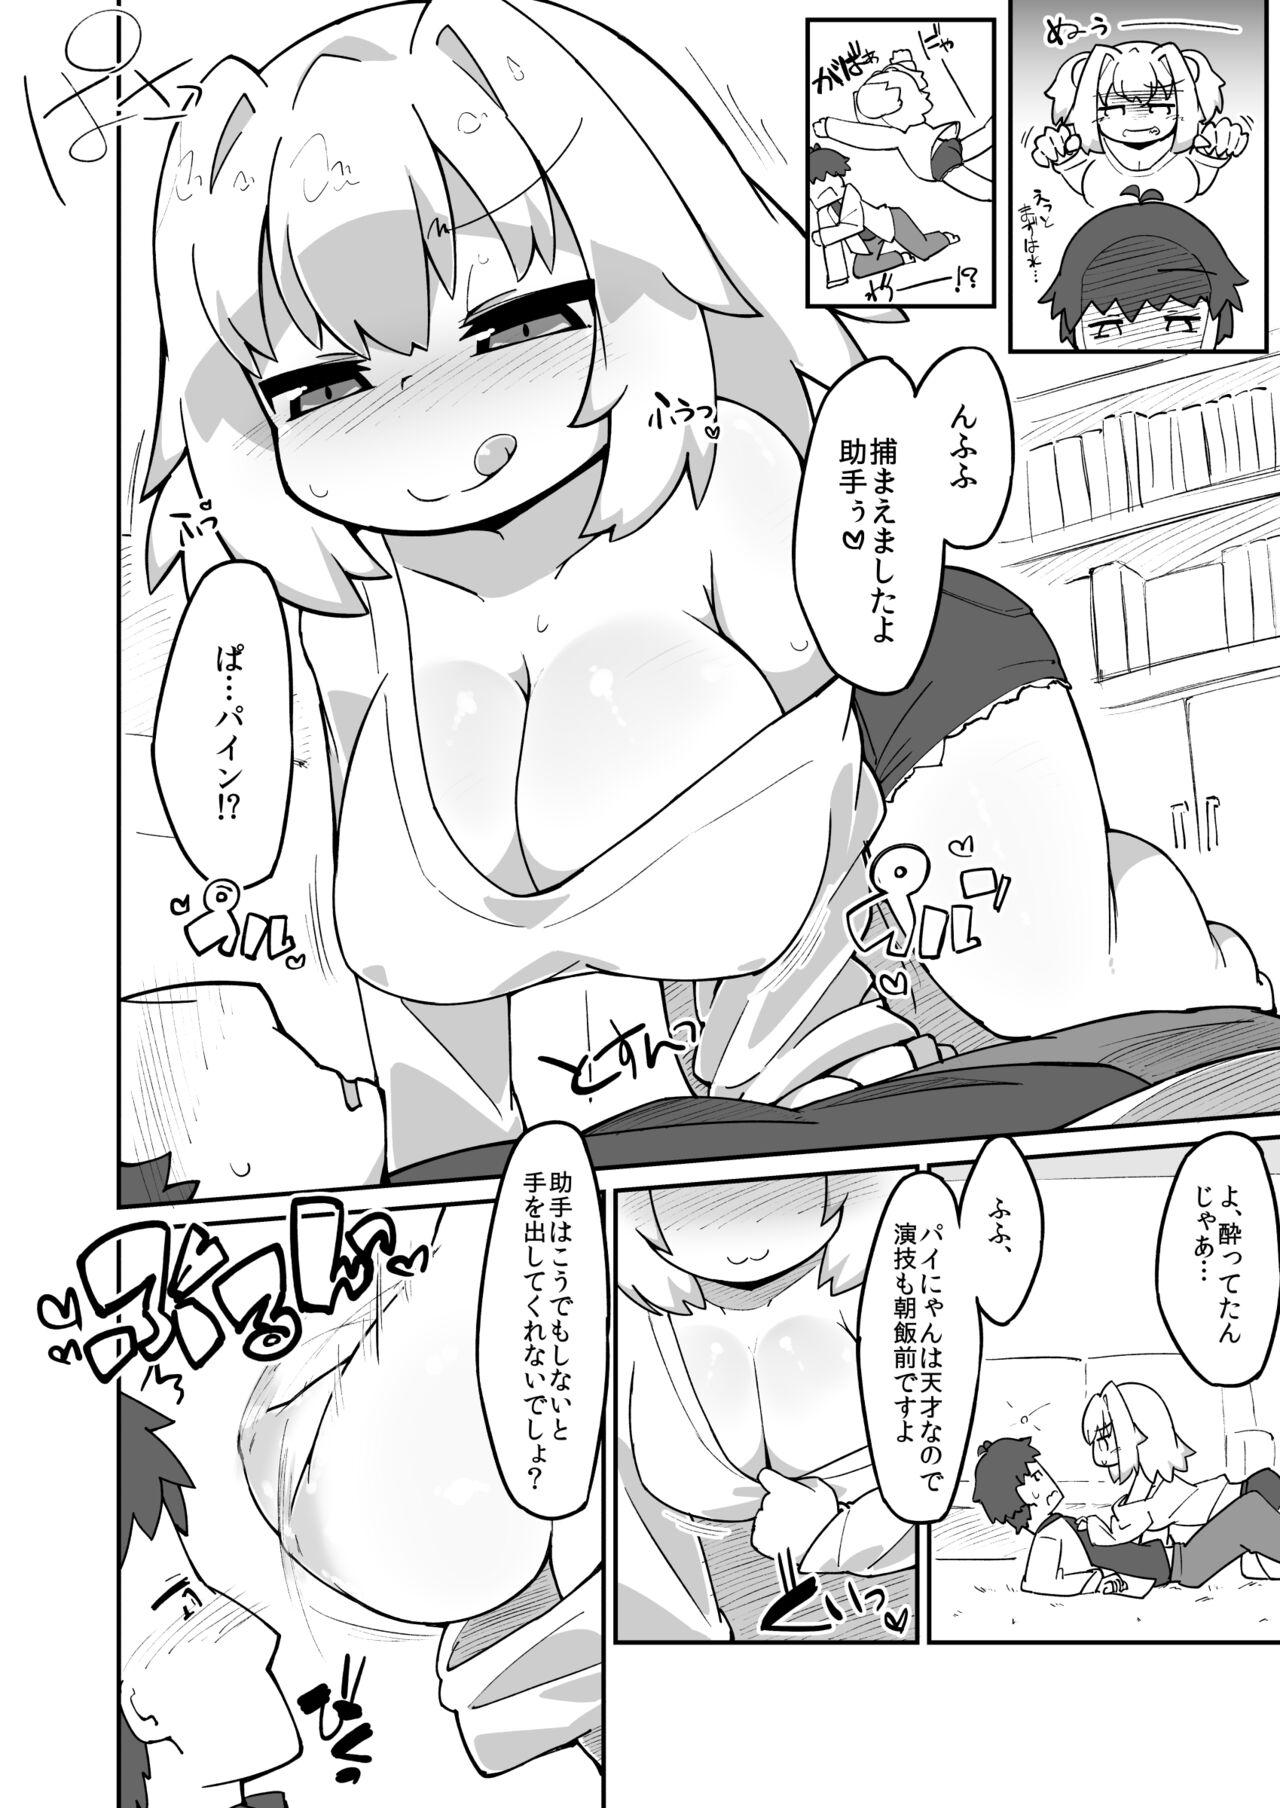 Amature Pi-nyan Ecchi Manga - Bomber girl Piroca - Page 2